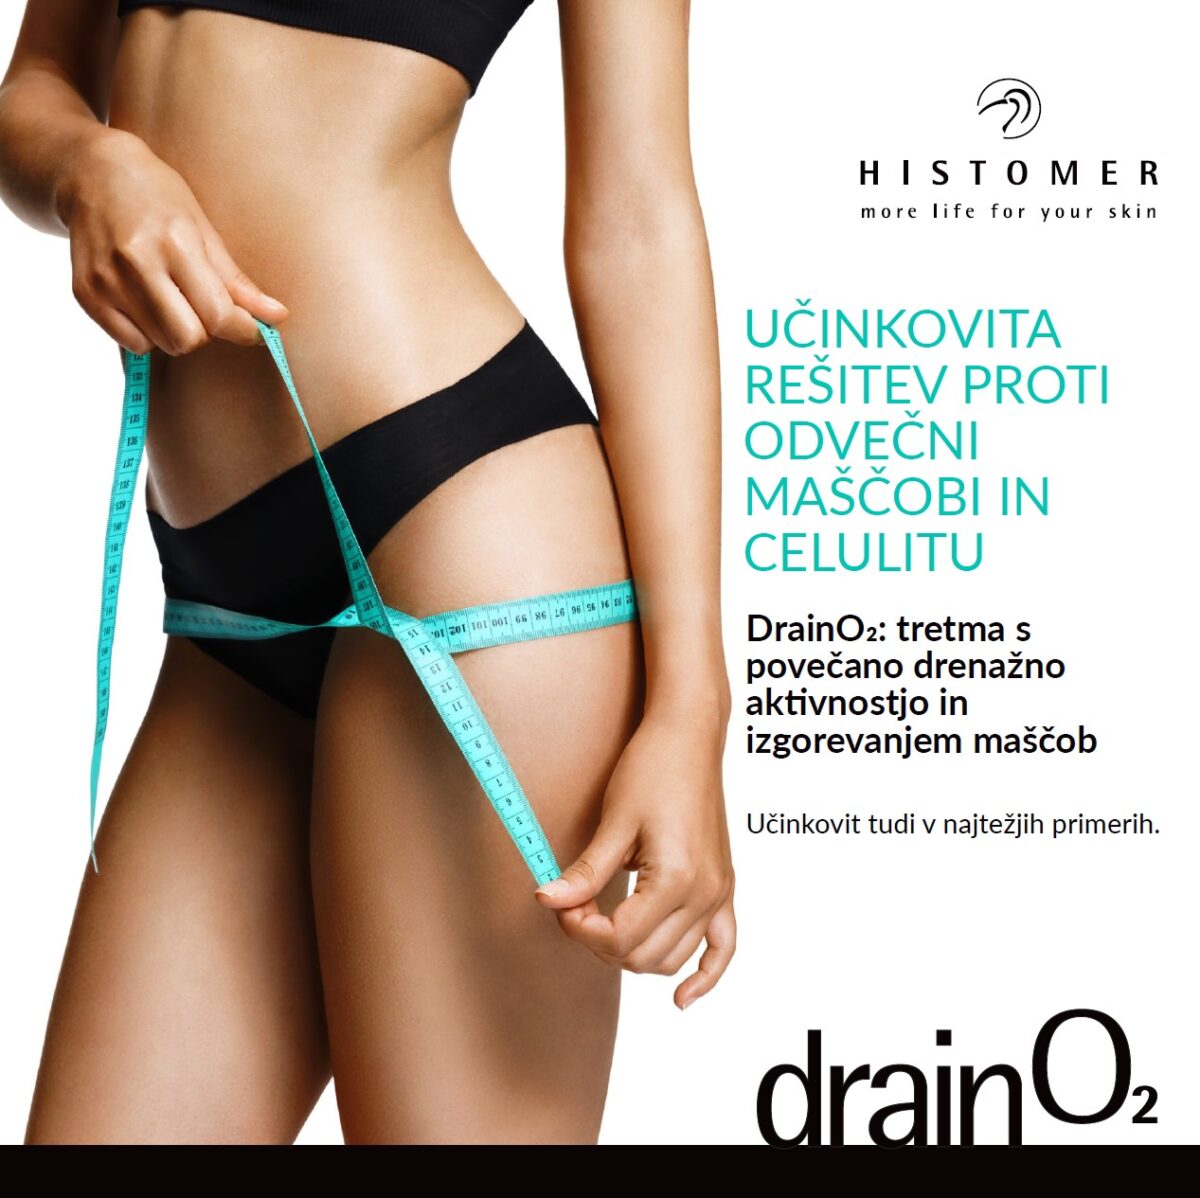 Drain O2 leaflet image